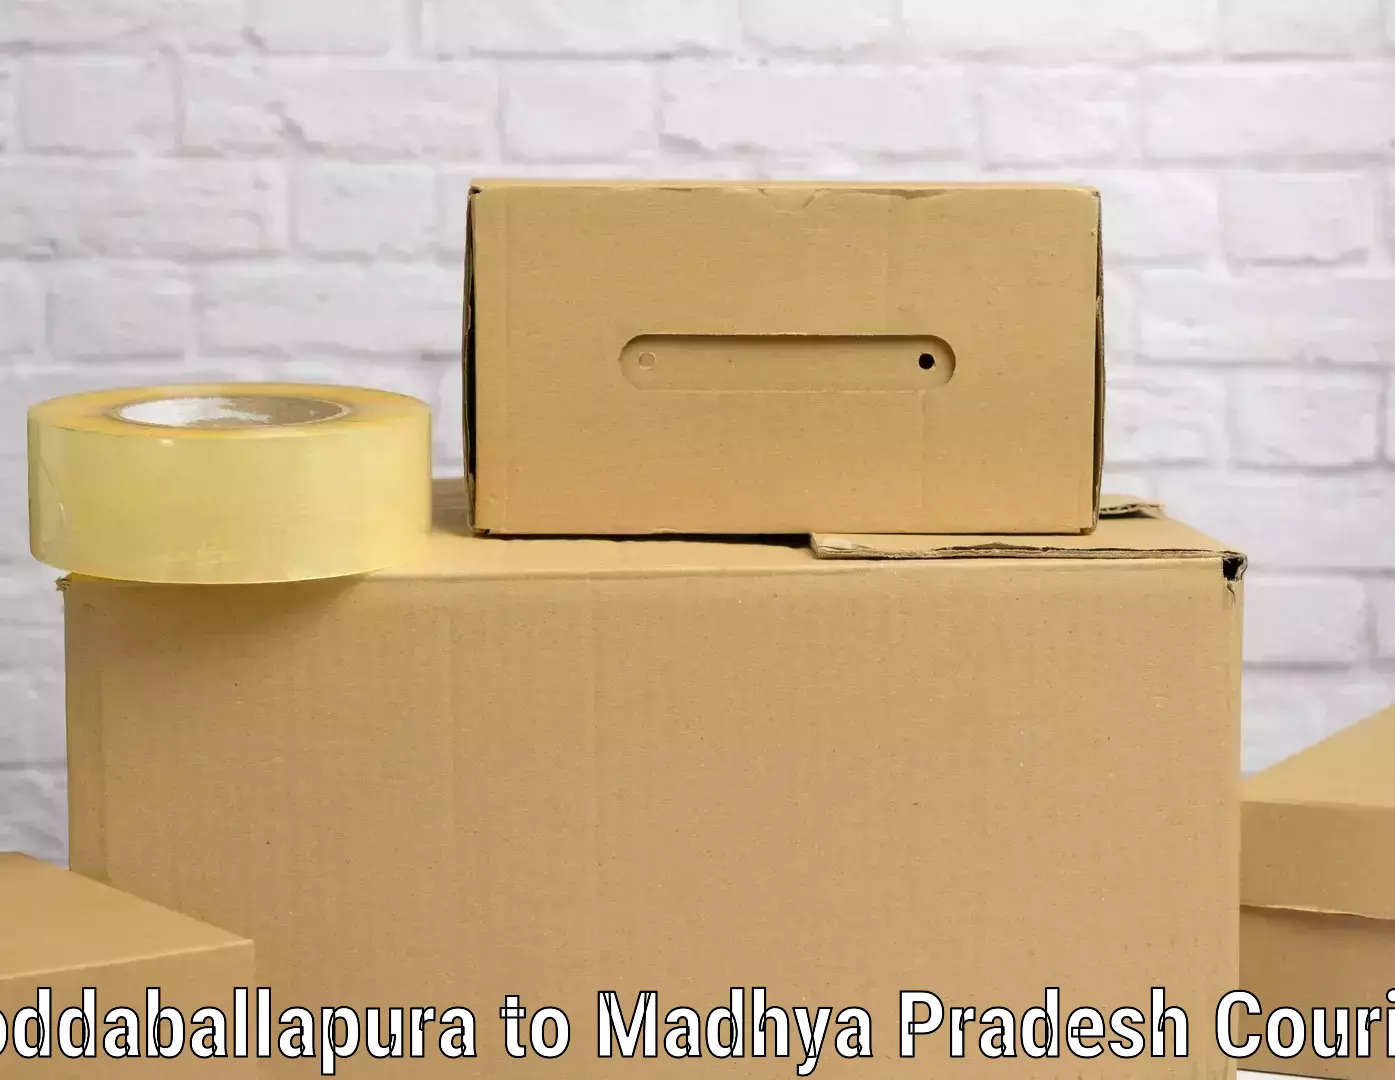 Luggage shipment specialists Doddaballapura to Madhya Pradesh